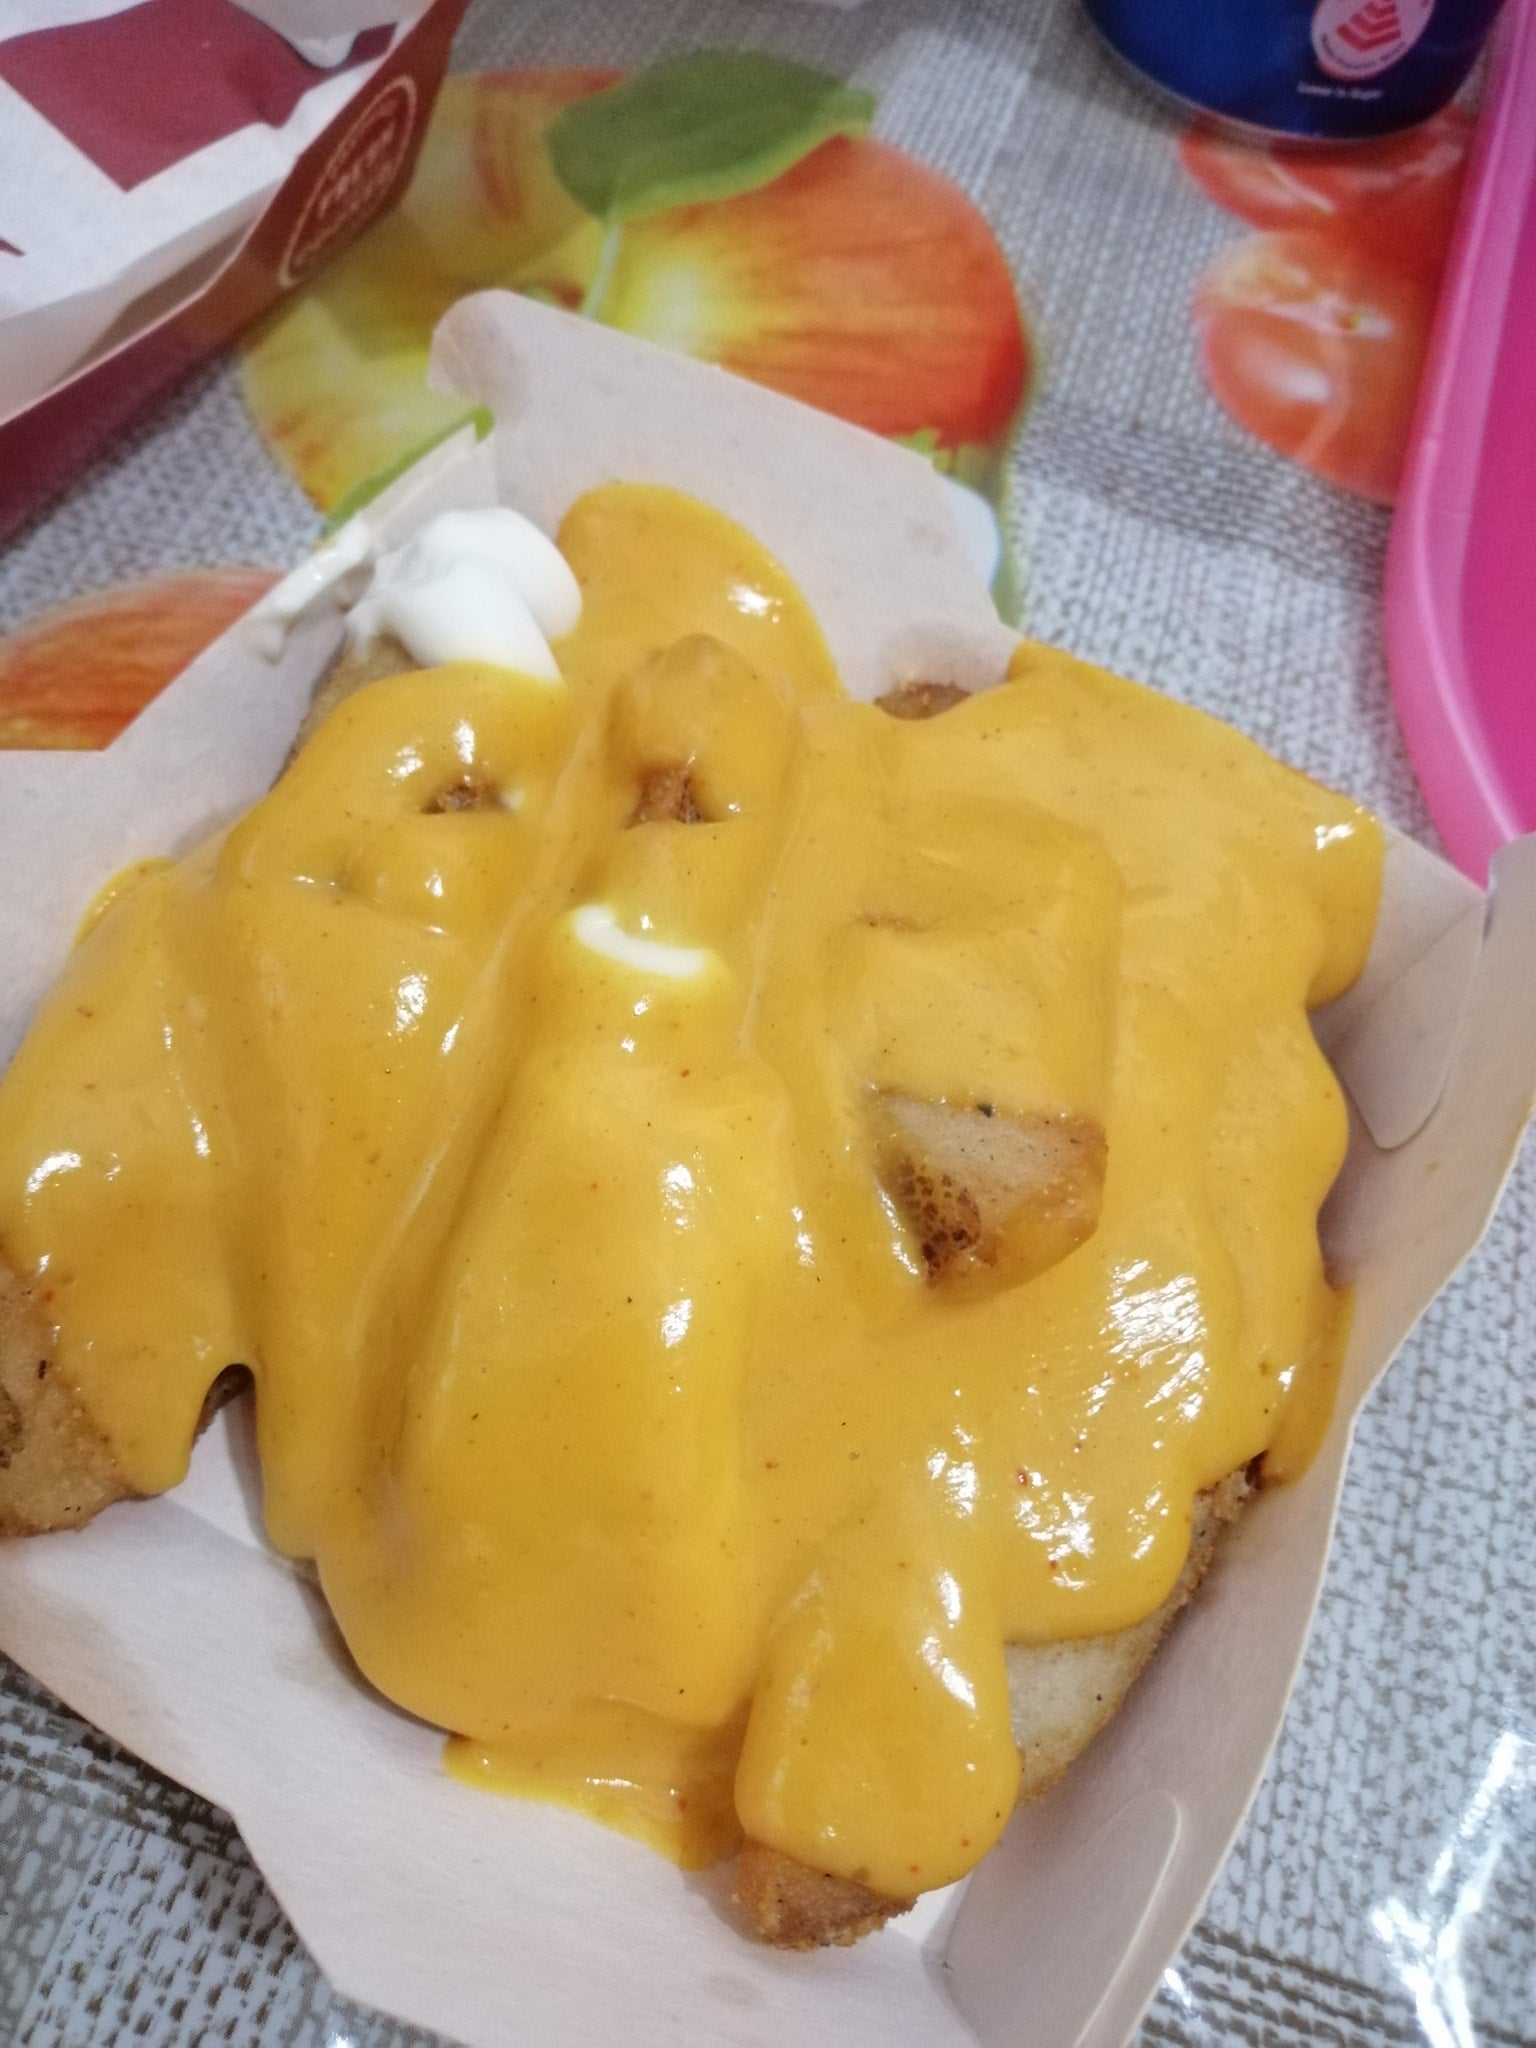 KFC potato wedges with extra cheese